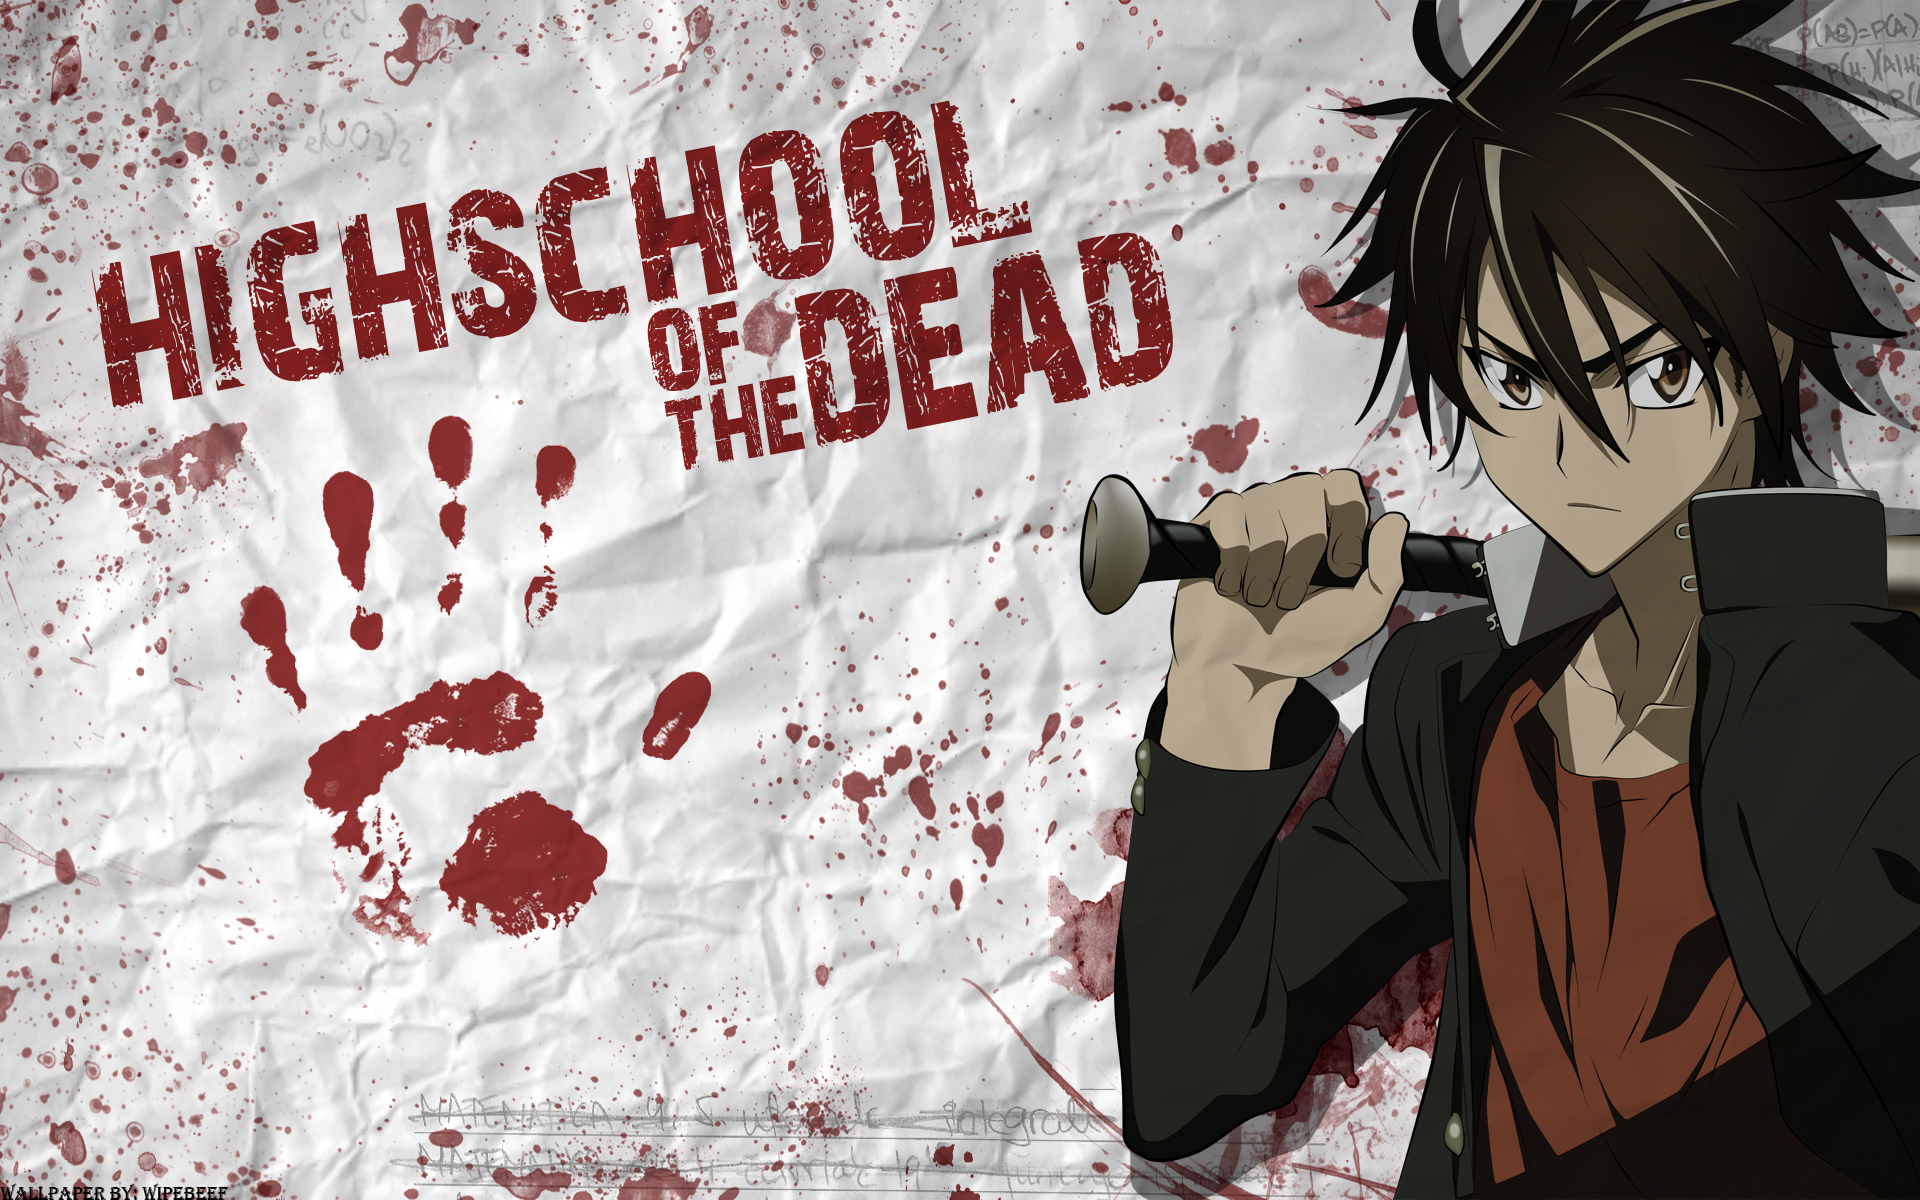 highschool der toten tapete,anime,karikatur,schwarzes haar,kunstwerk,illustration